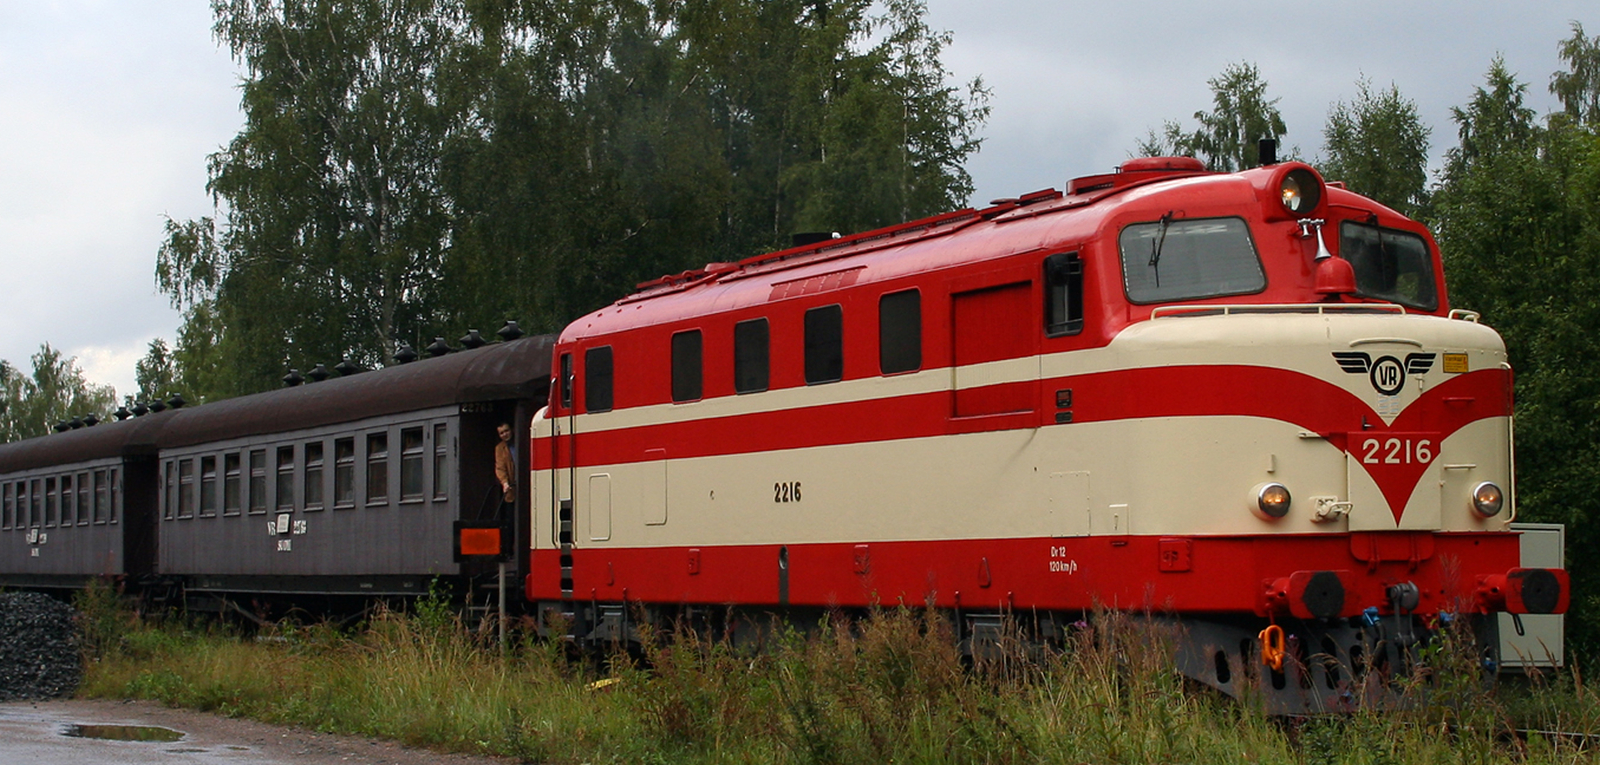 The preserved Dr12 No. 2216 in August 2005 in Rajamäki, Nurmijärvi